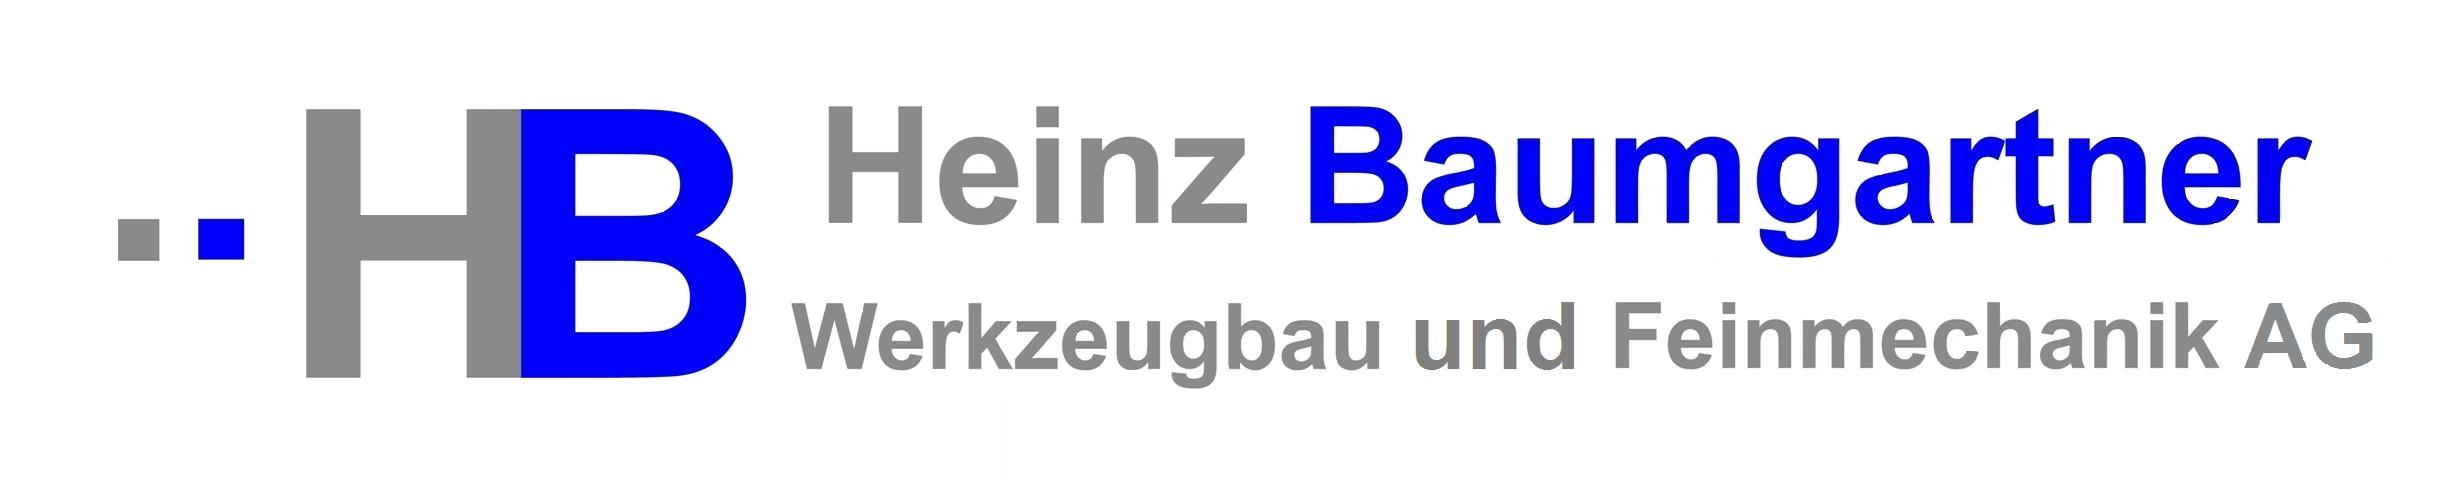 Heinz-Baumgartner Werkzeugbau und Feinmechanik AG